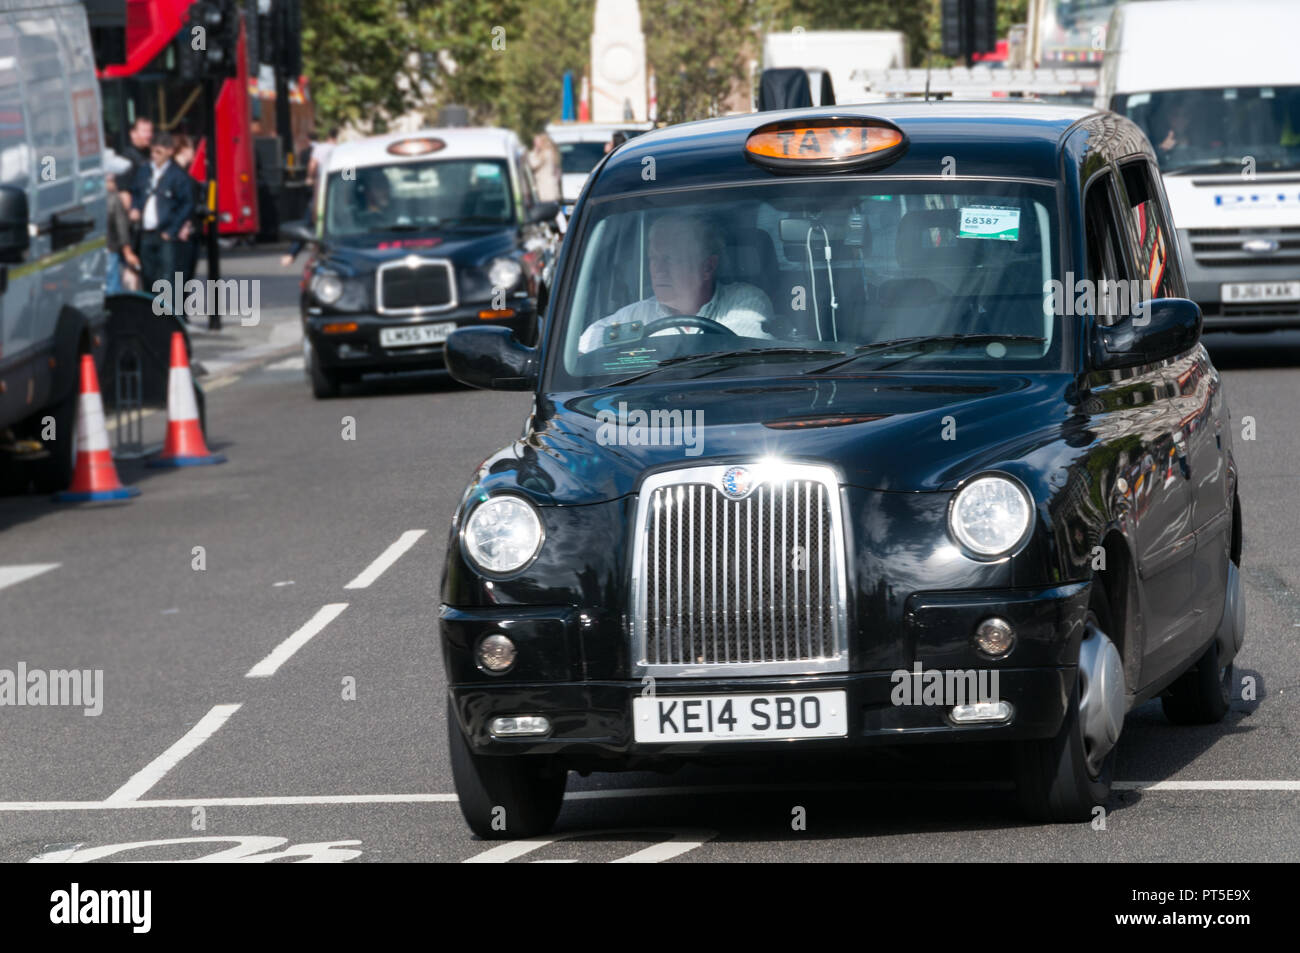 UK taxi in London street Stock Photo